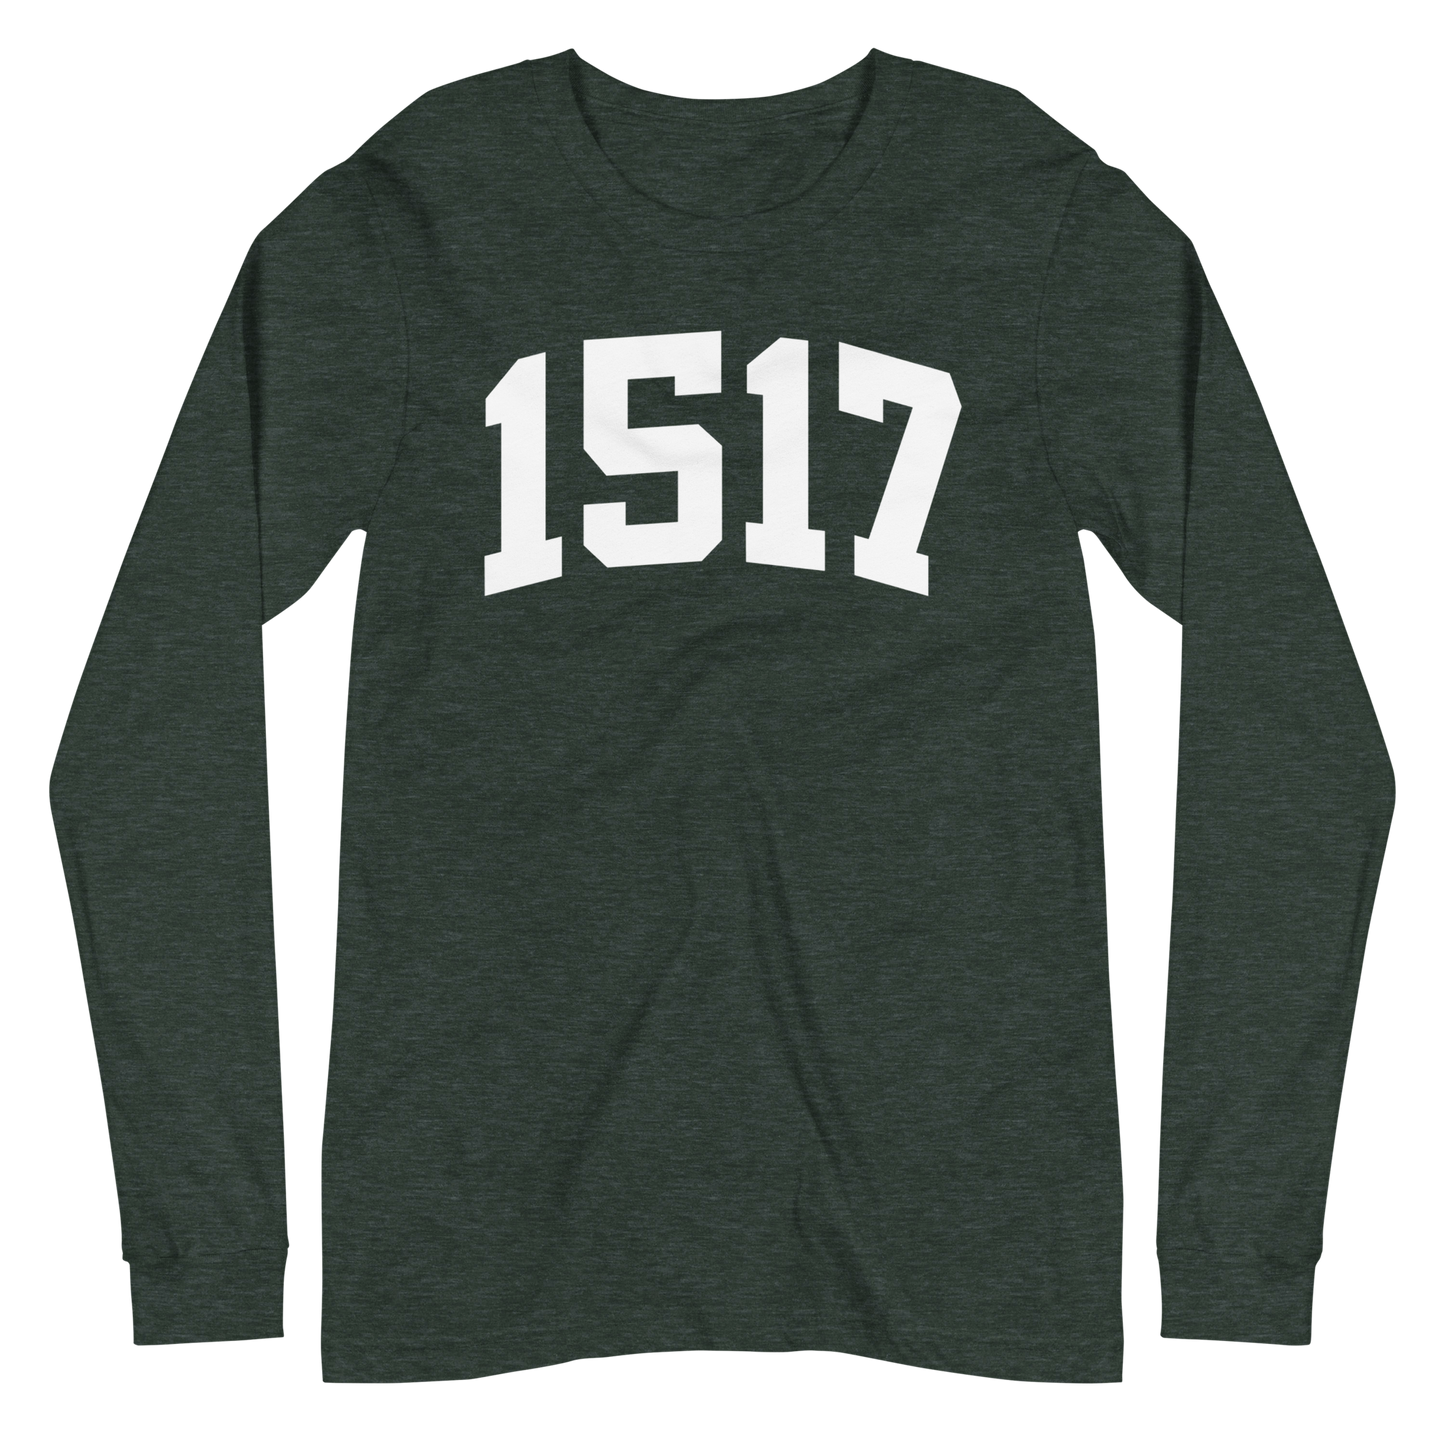 1517 Long Sleeve Shirt